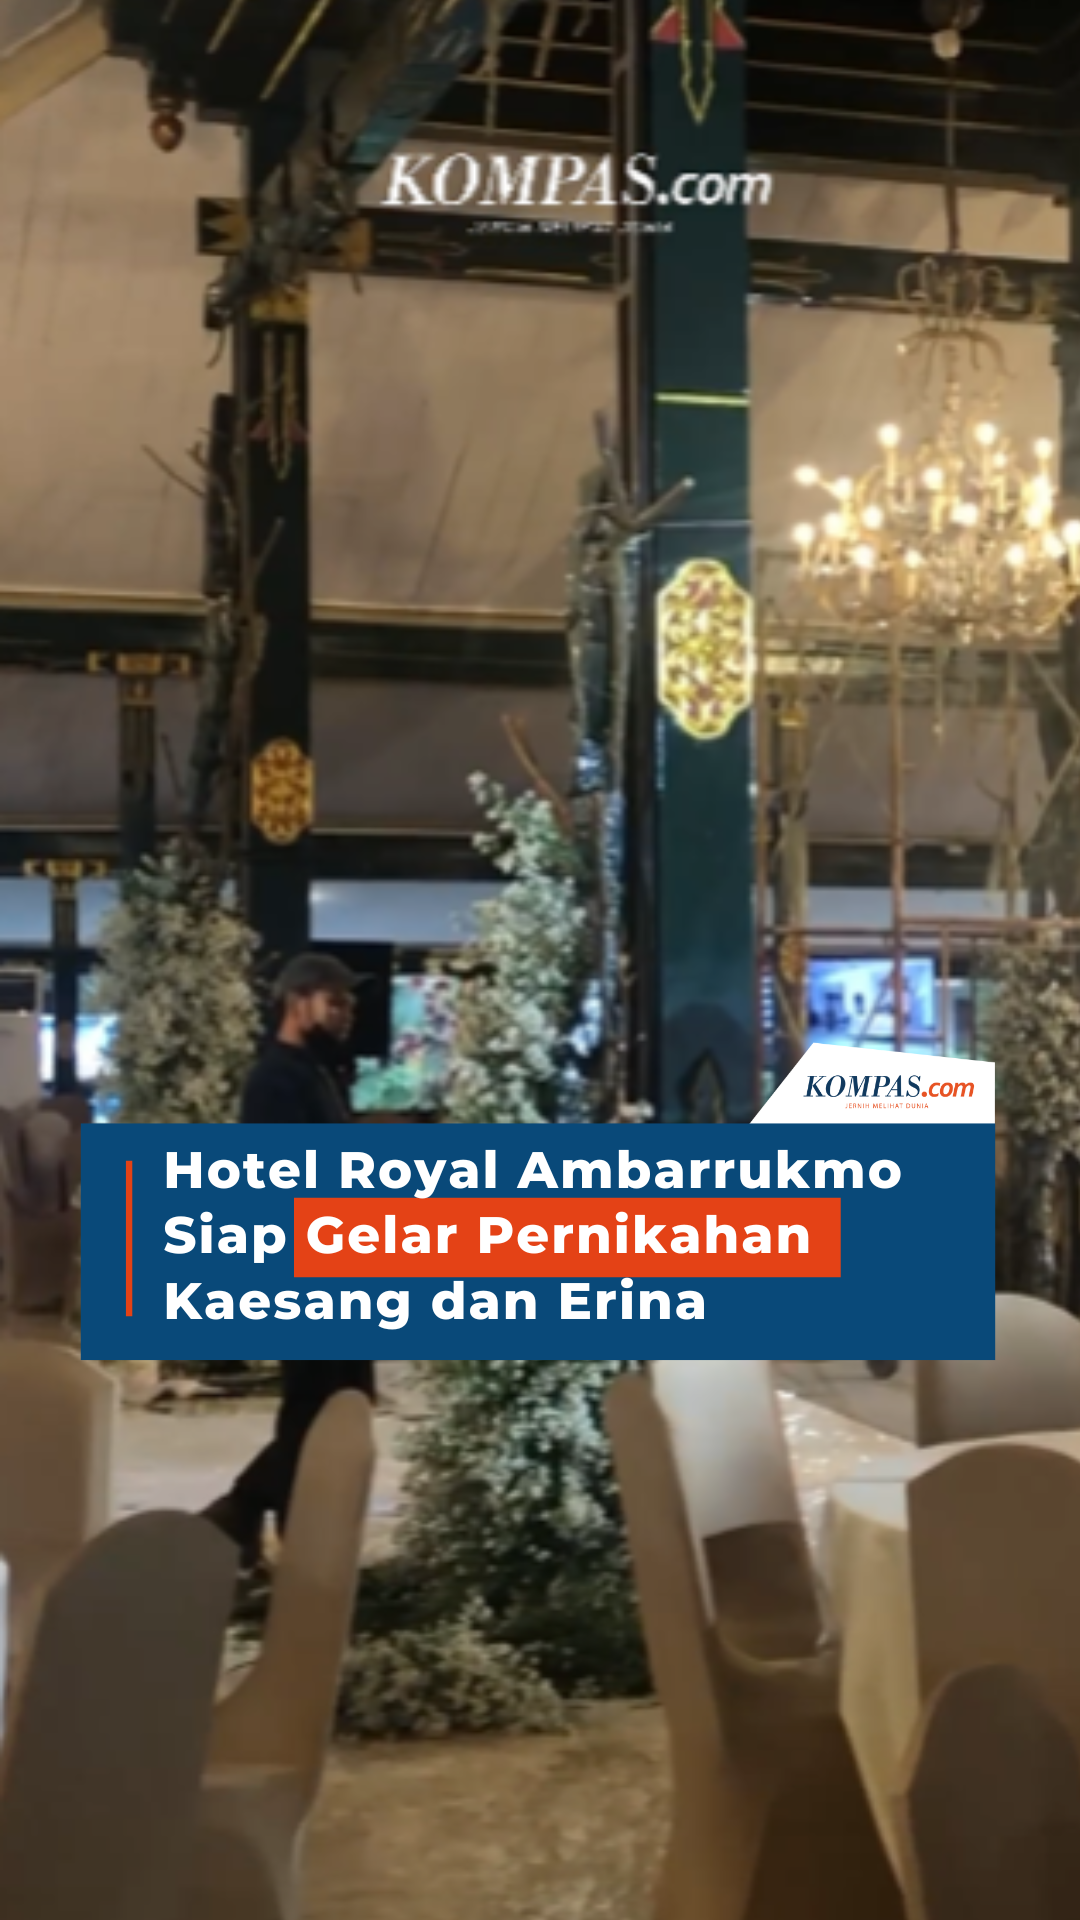 Melihat Hotel Royal Ambarrukmo, Lokasi Pernikahan Kaesang